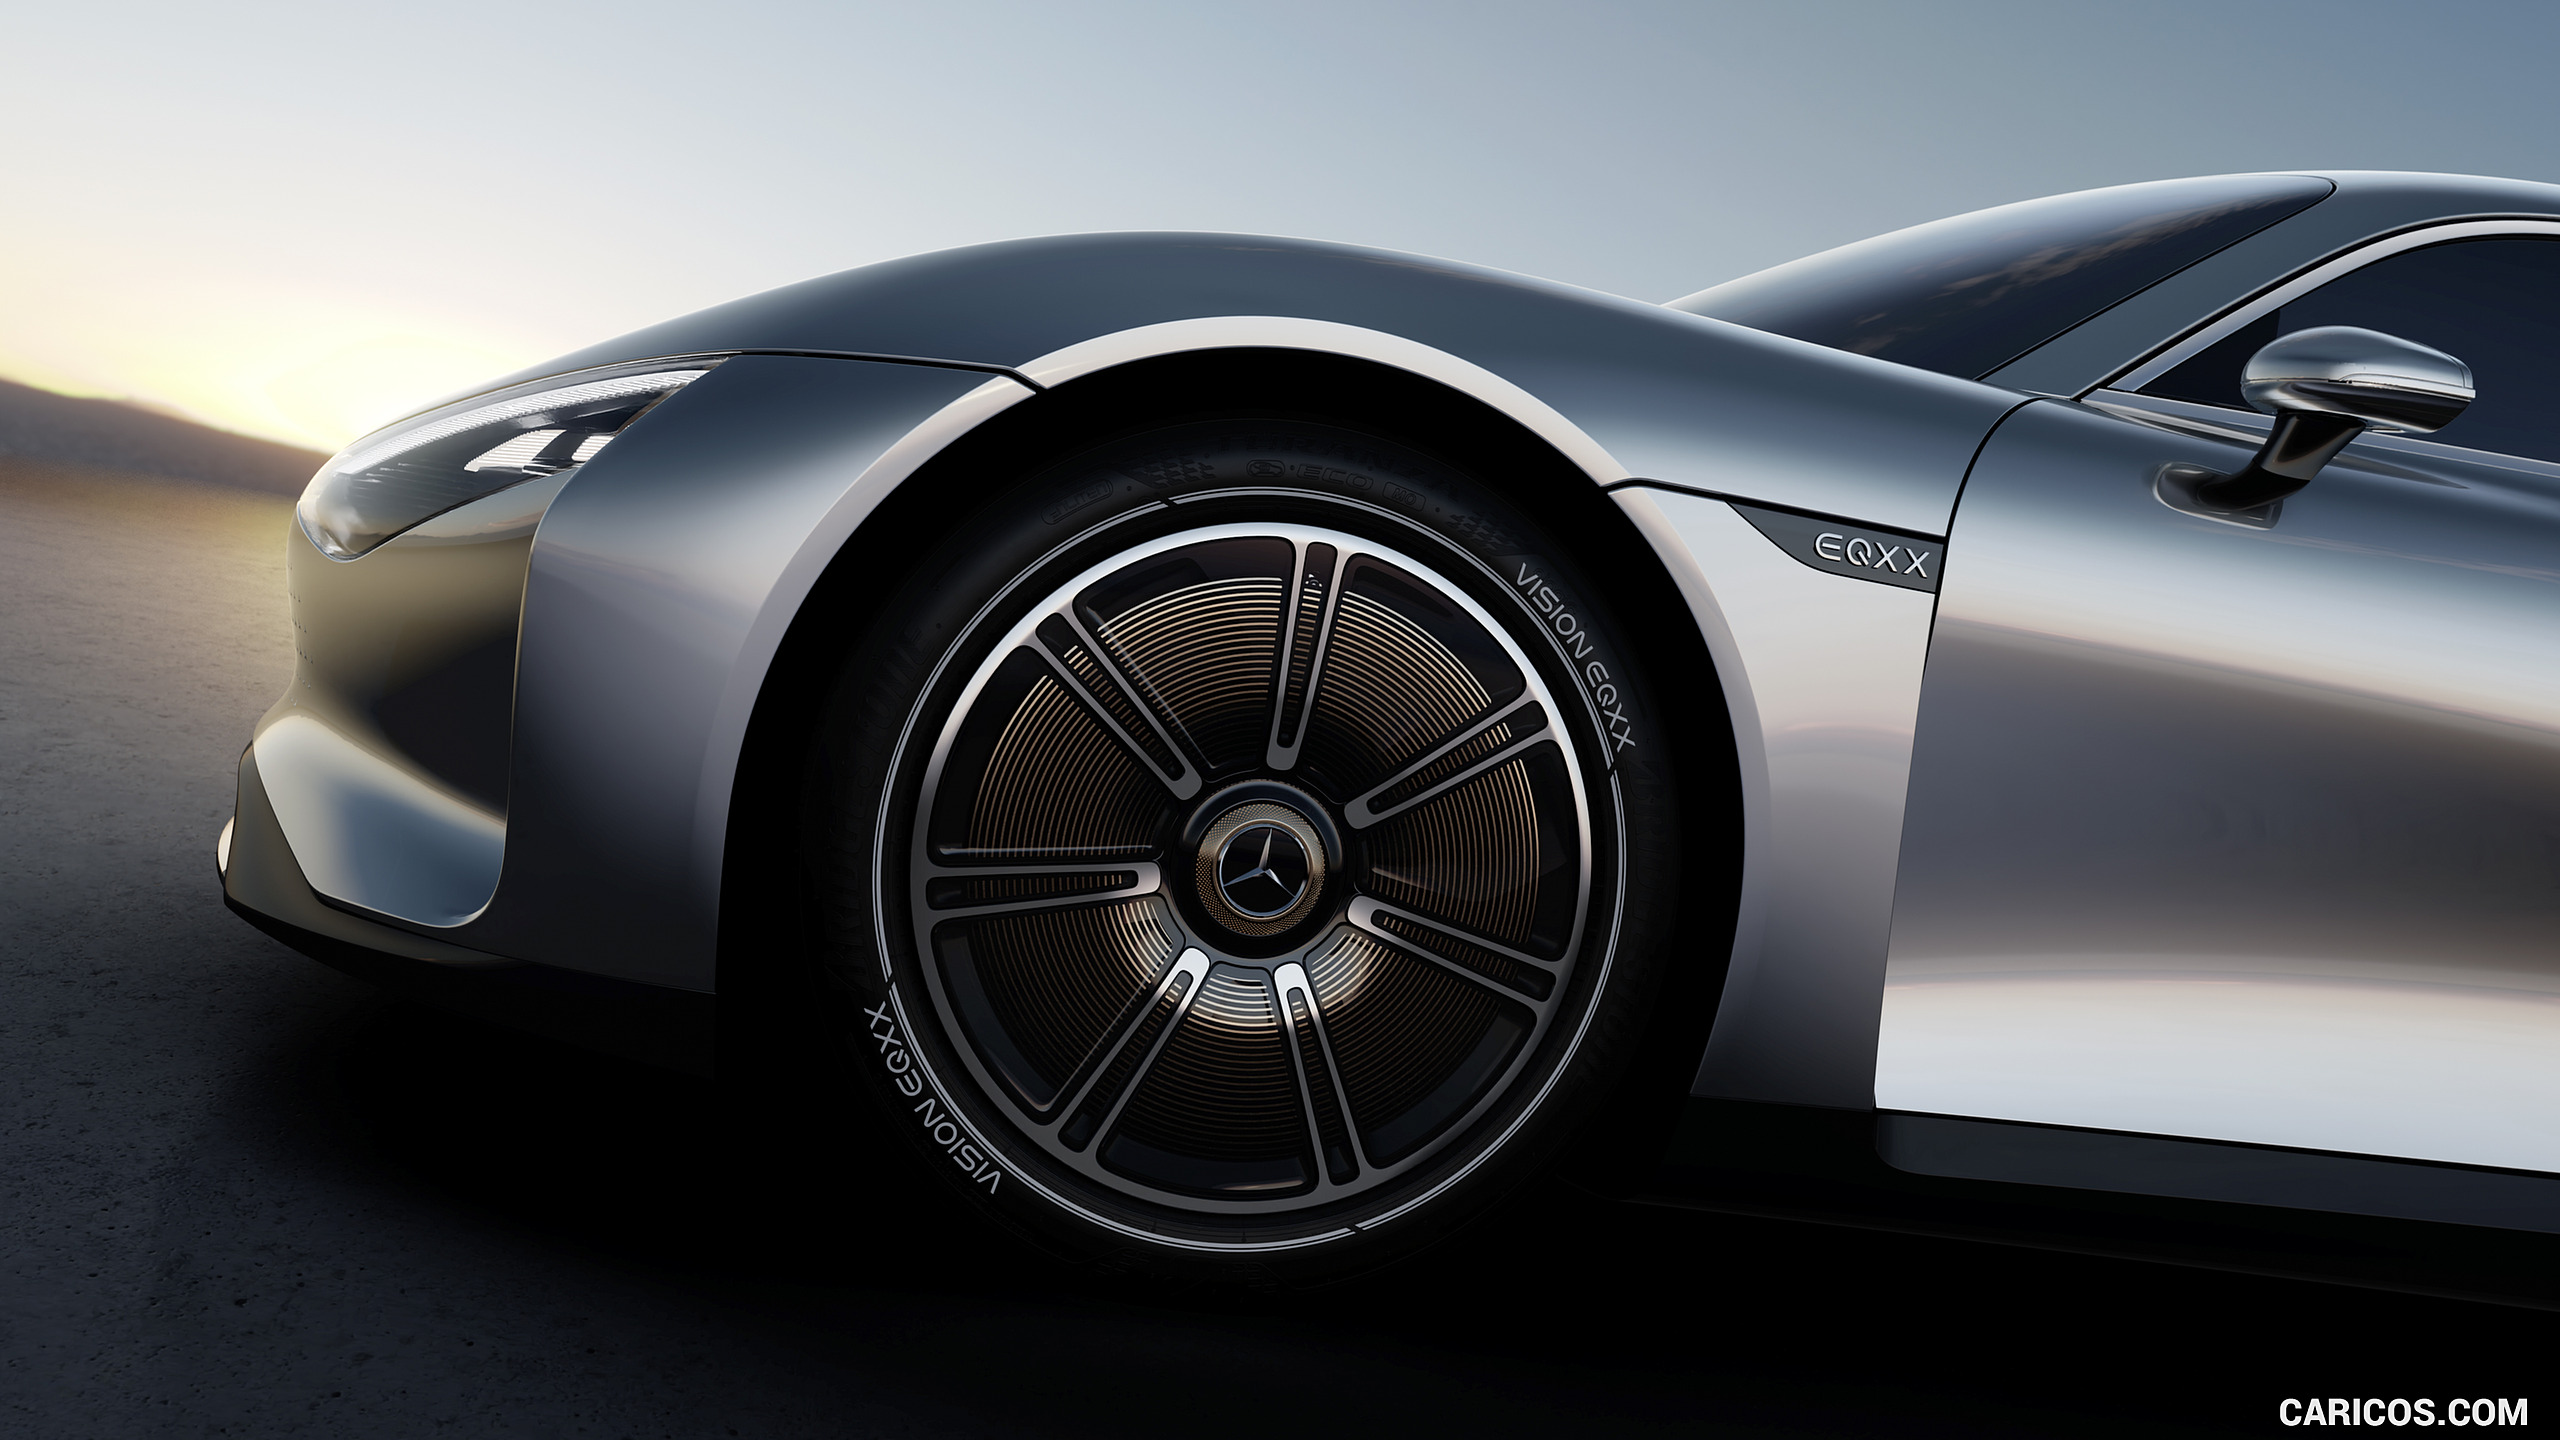 2022 Mercedes-Benz Vision EQXX - Wheel, #5 of 146